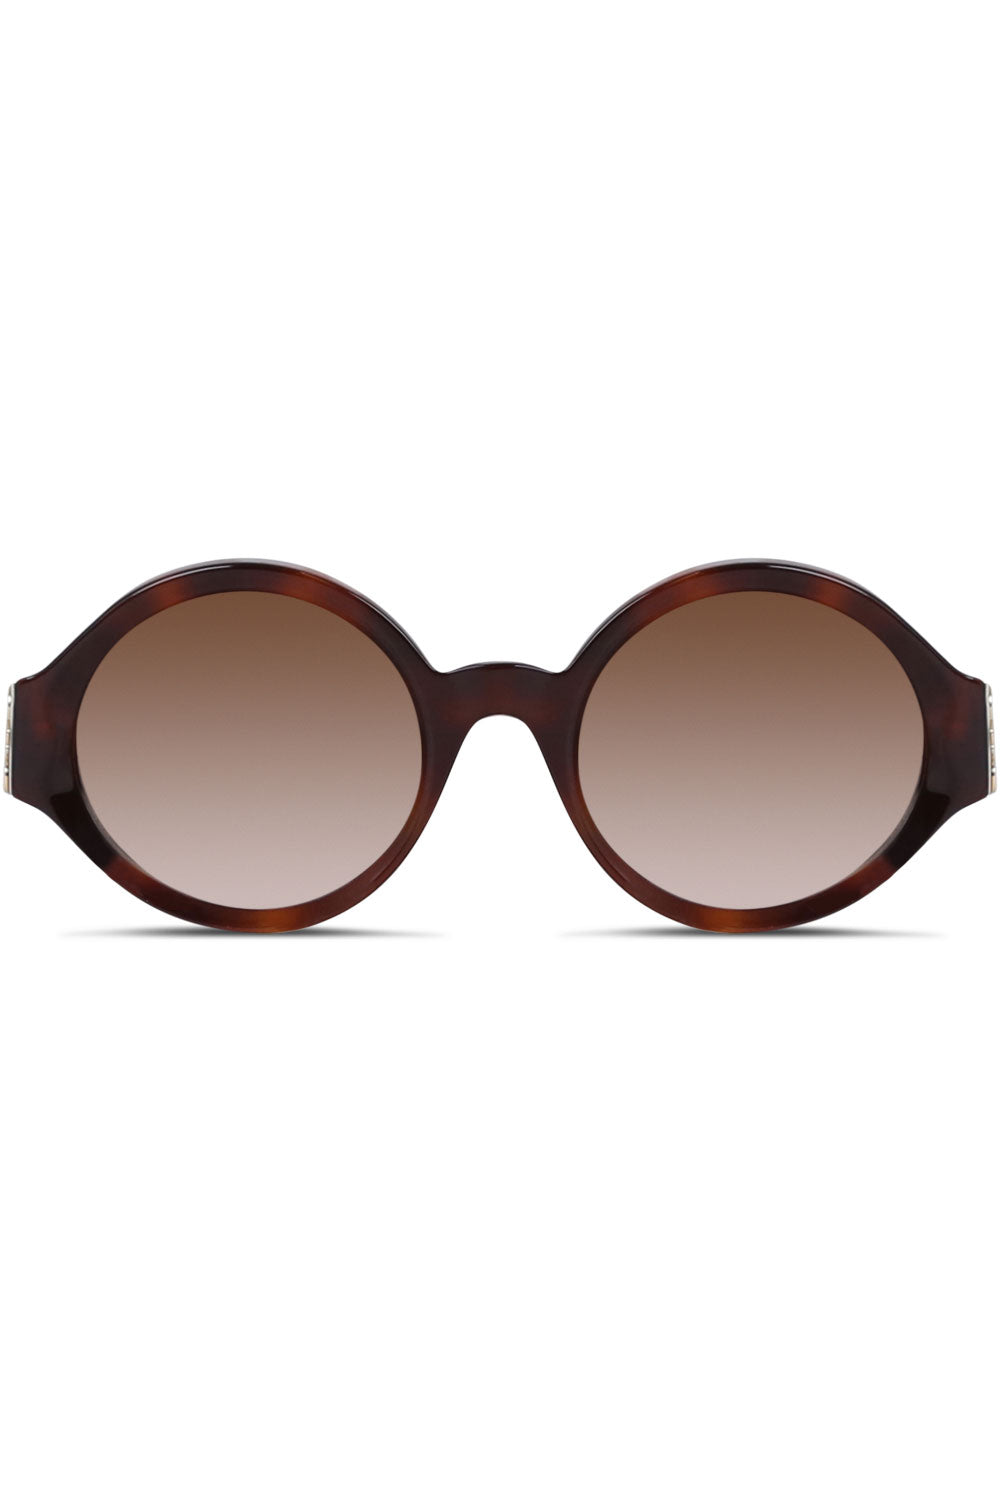 Ray Ban RB4165 Men's Sunglasses - Rubber Light Havana/Brown Gradient Lens -  iCuracao.com